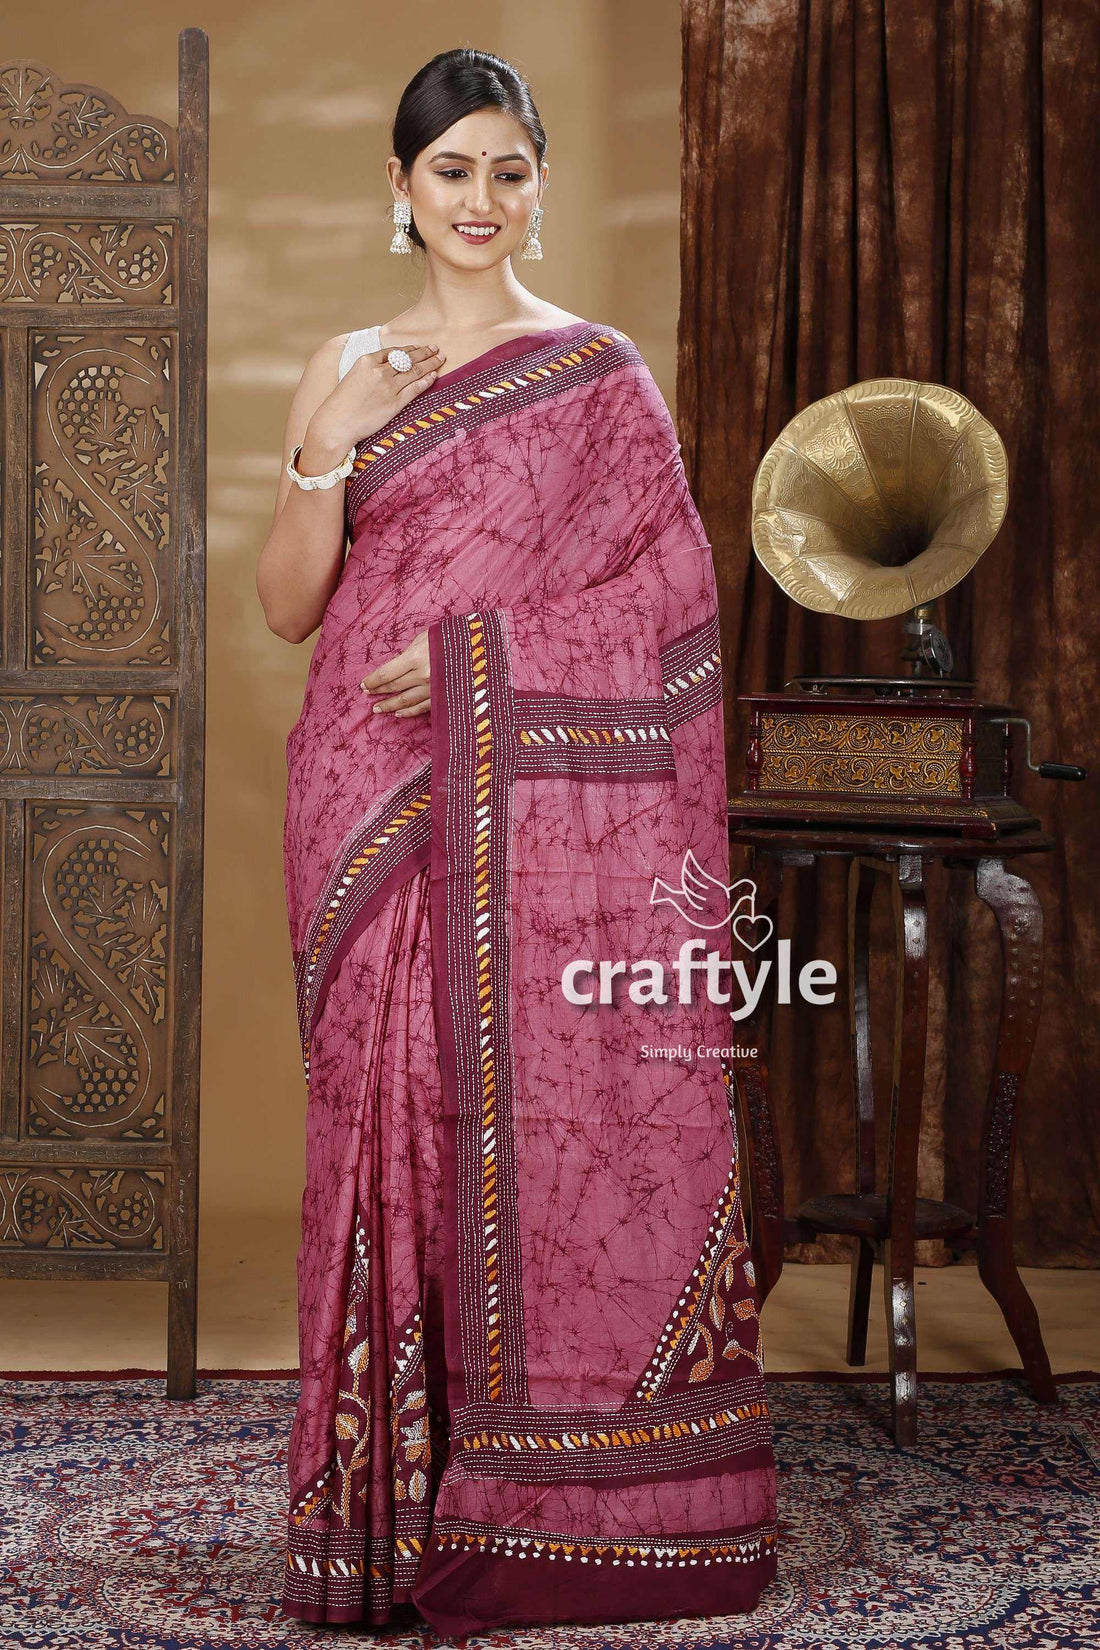 Unique Design Batik Cotton Kantha Work Saree-Craftyle